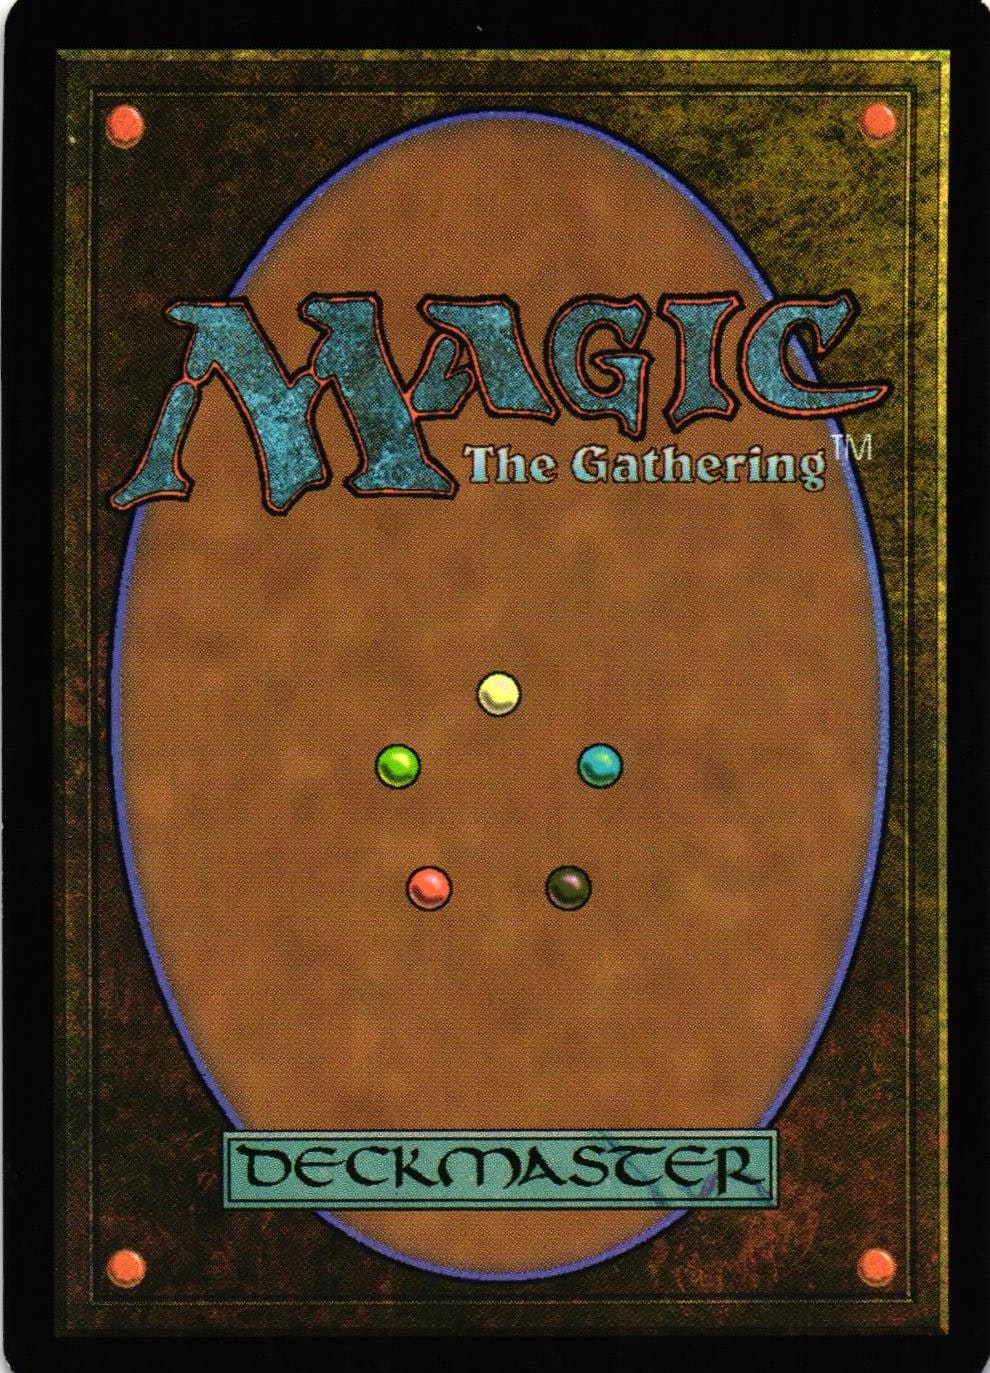 Alchemist Apprentice Common 42/244 Avacyn Restored (AVR)Magic the Gathering